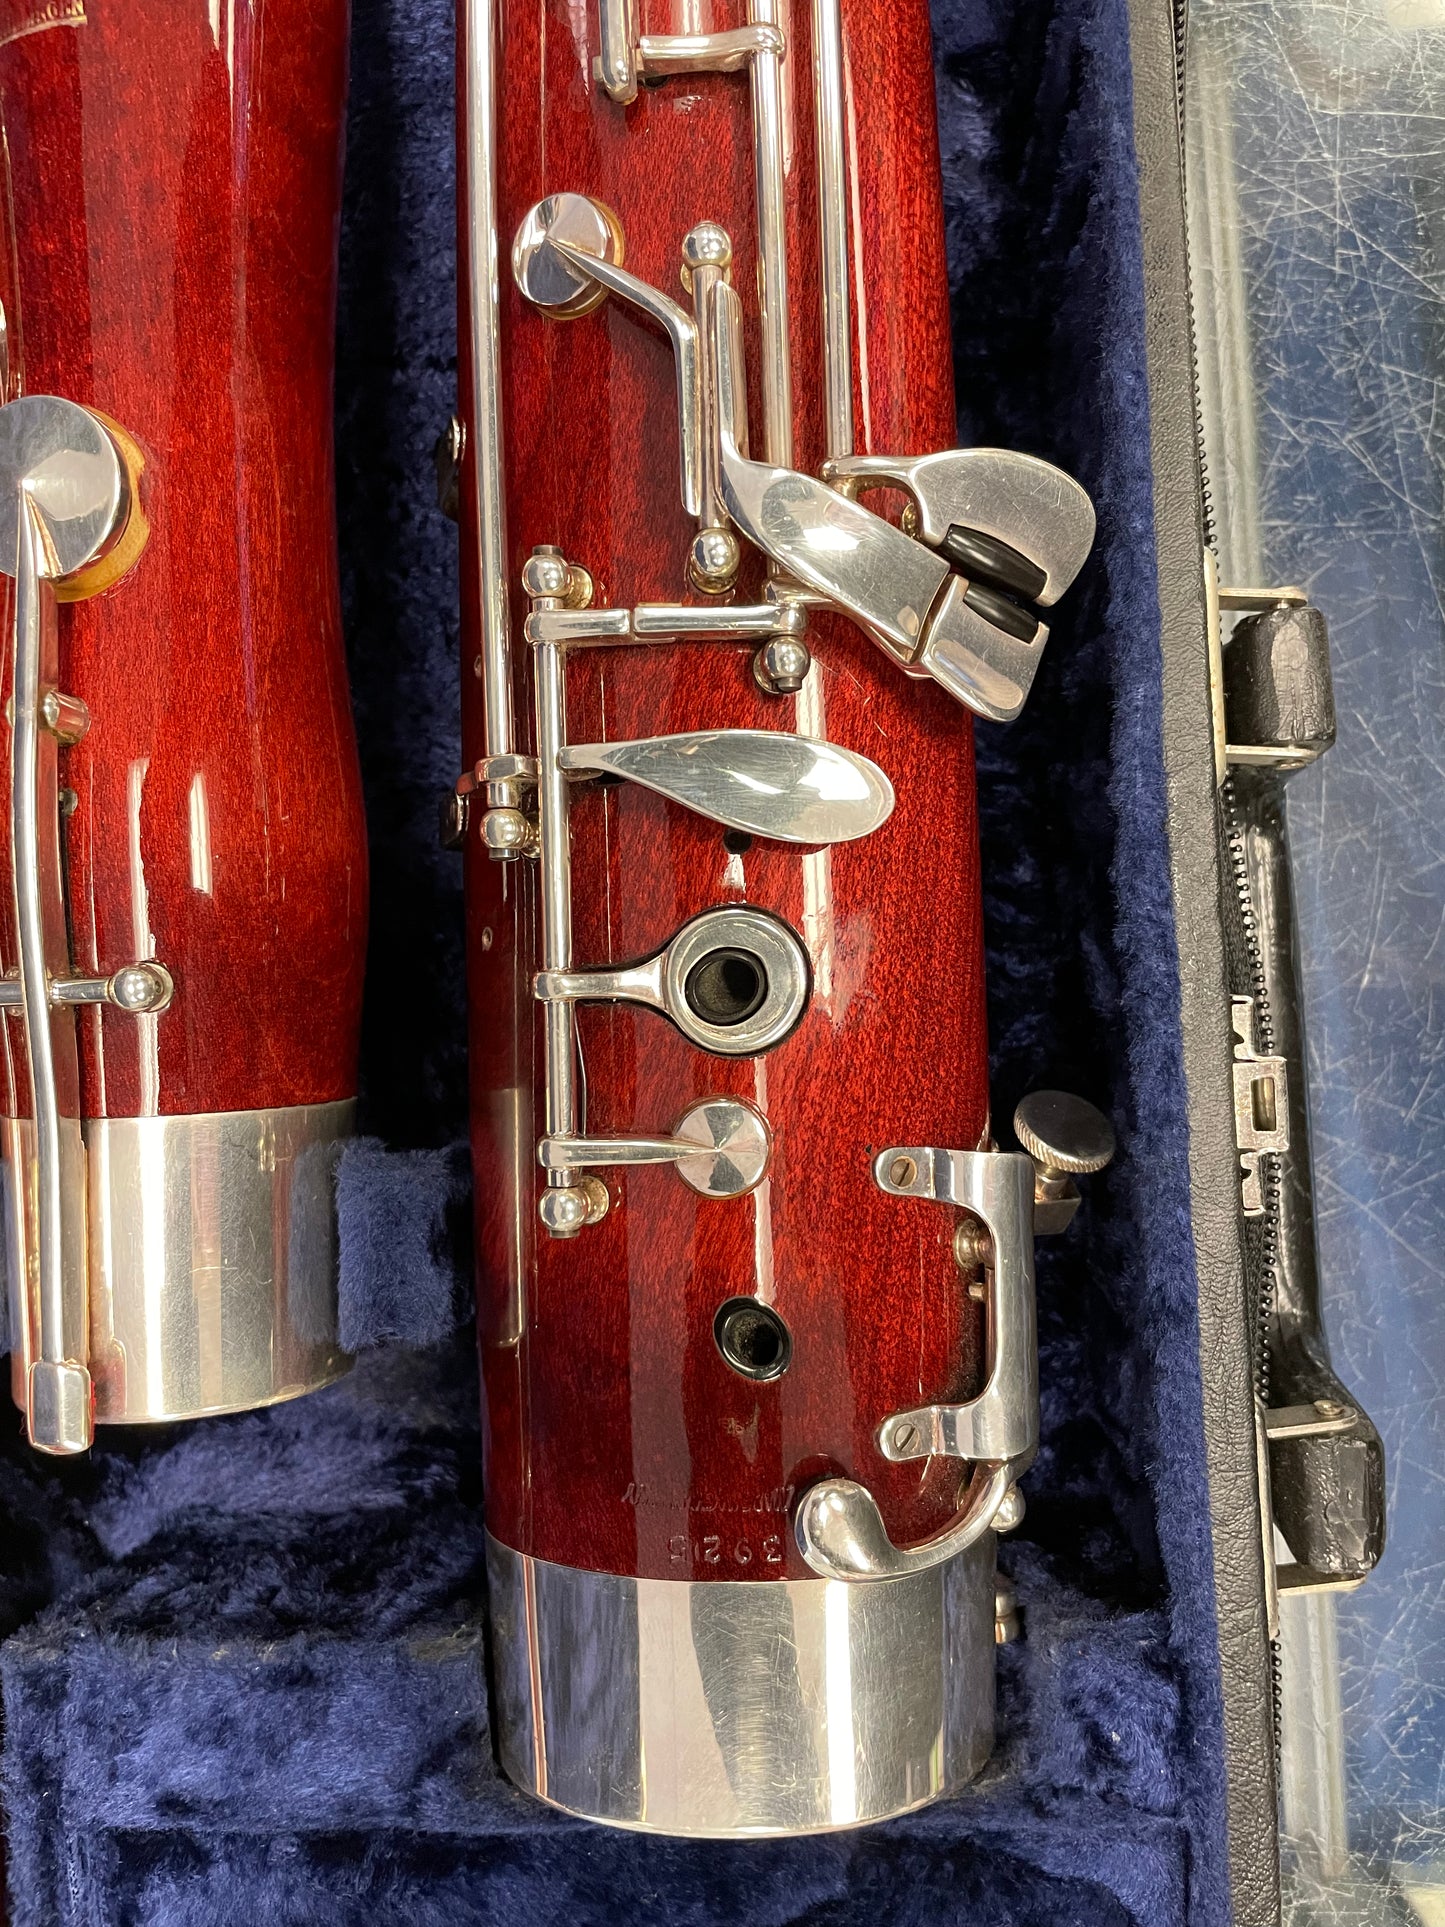 Pre-Owned Moosman 98A Bassoon